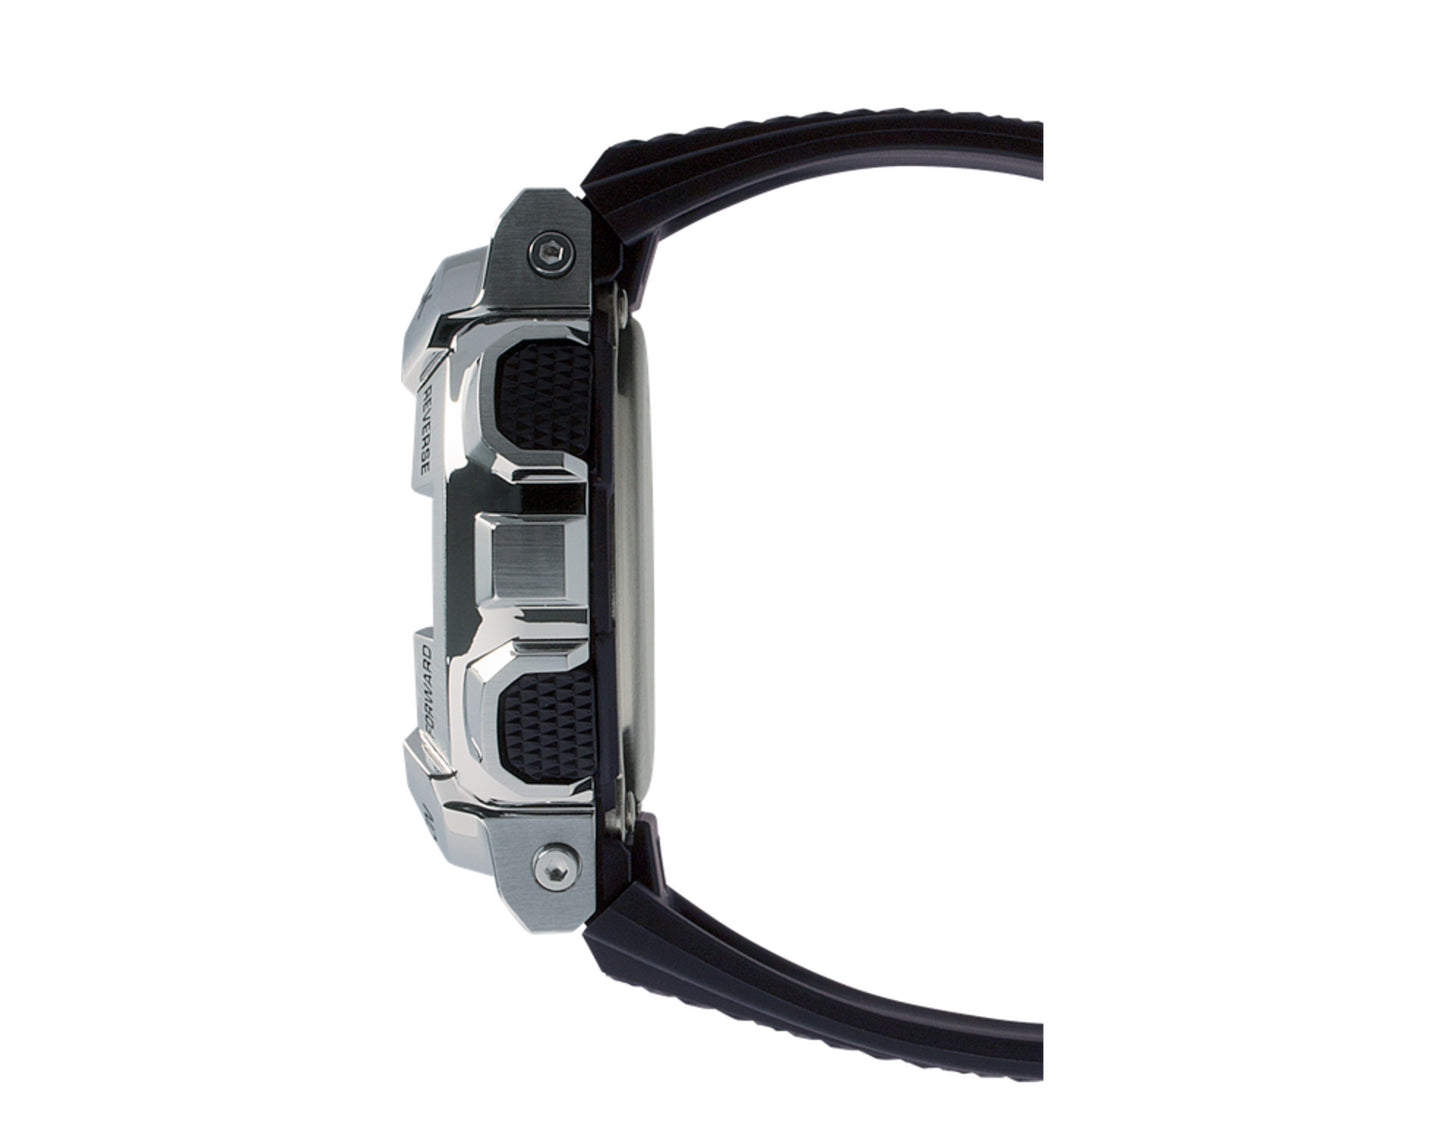 Casio G-Shock GM110B Analog-Digital Metal-Resin Multi/Black Watch GM110B-1A